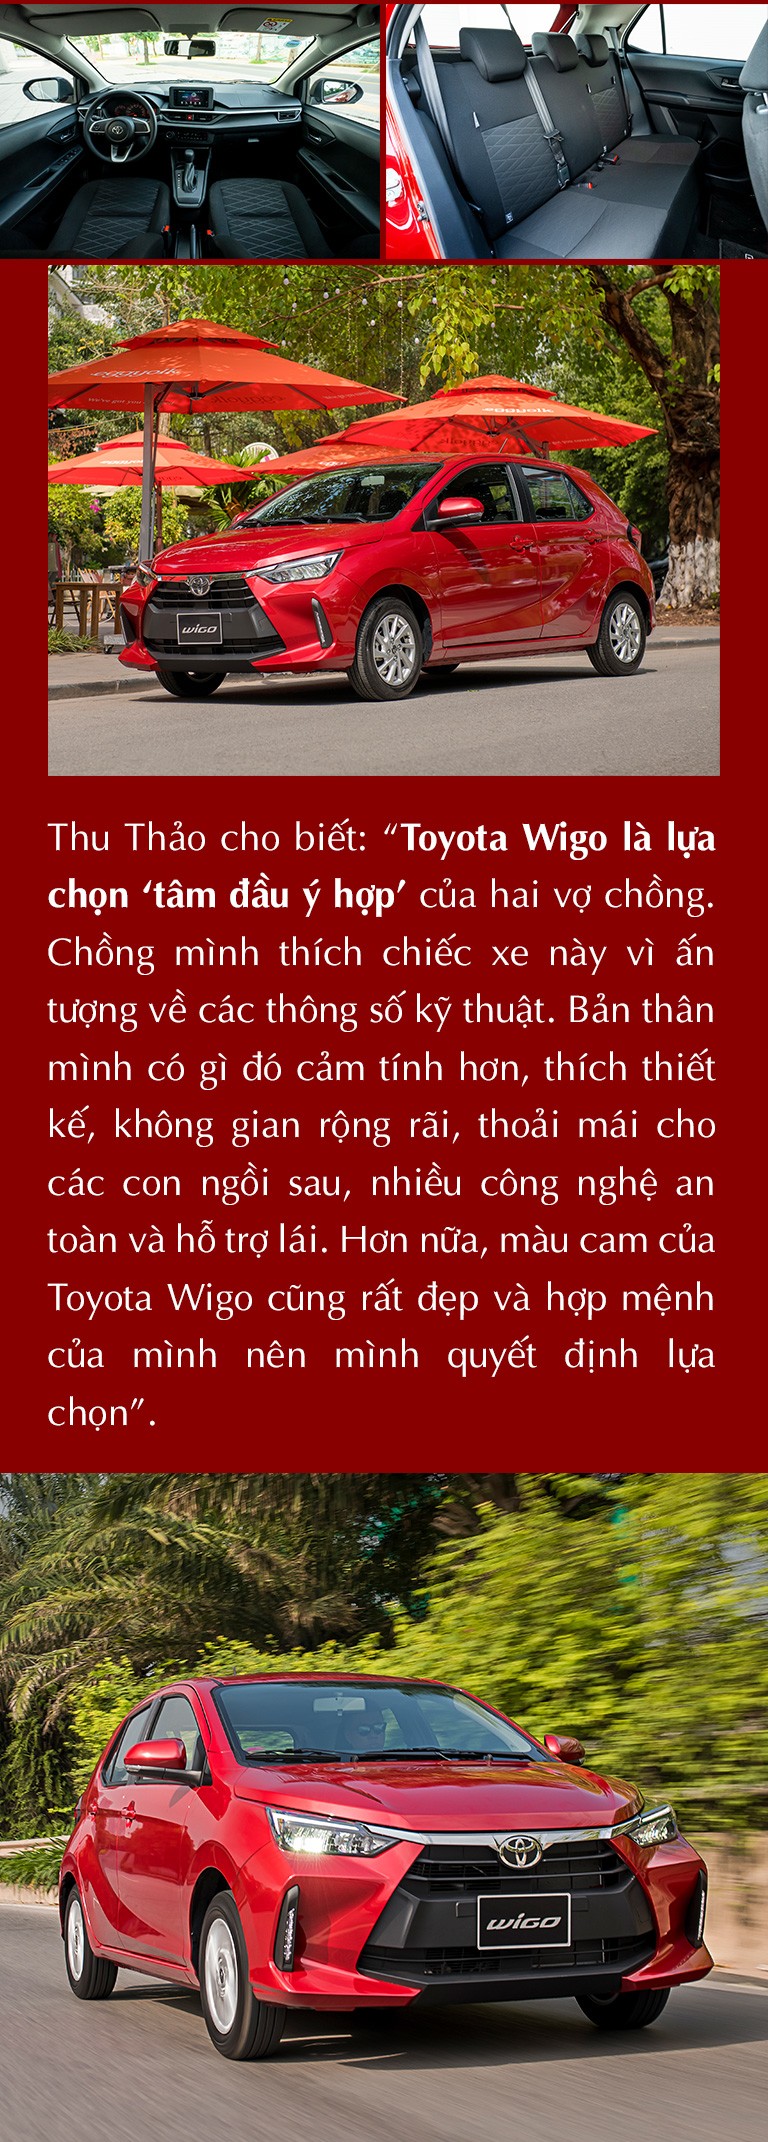 Toyota Wigo - Lựa chọn “tâm đầu ý hợp” - 6